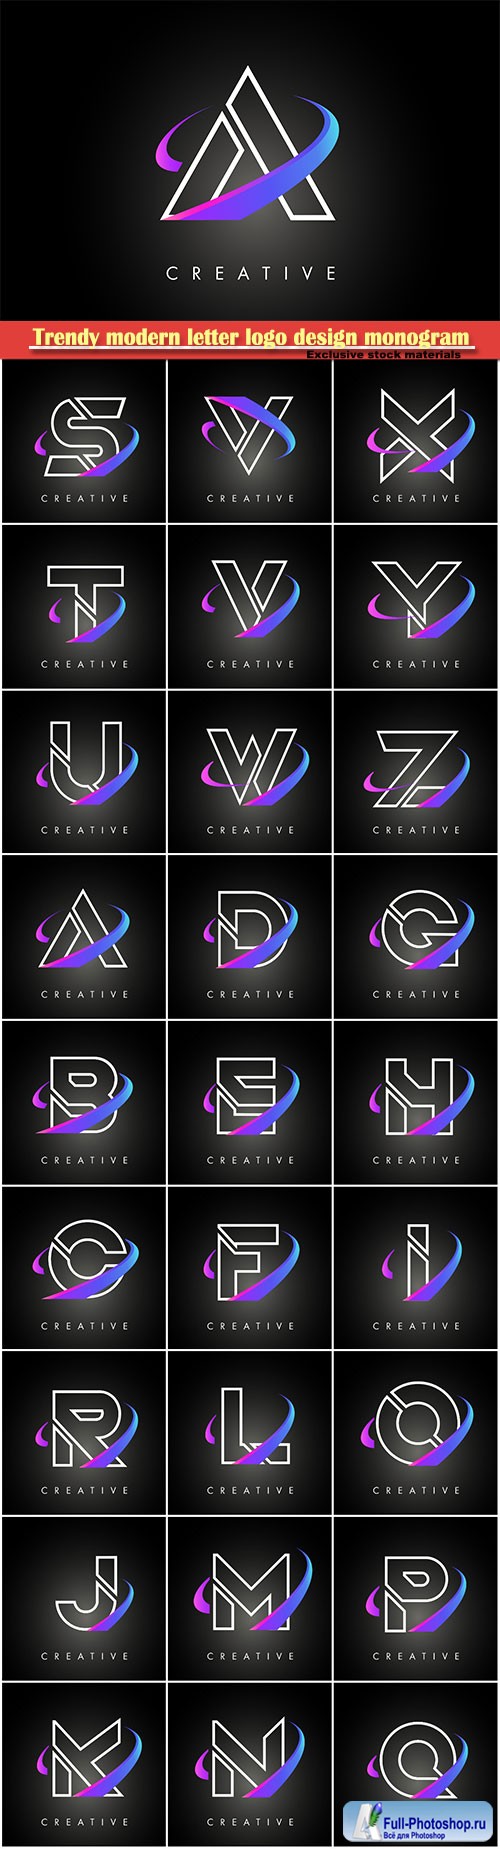 Trendy modern letter logo design monogram and creative swoosh